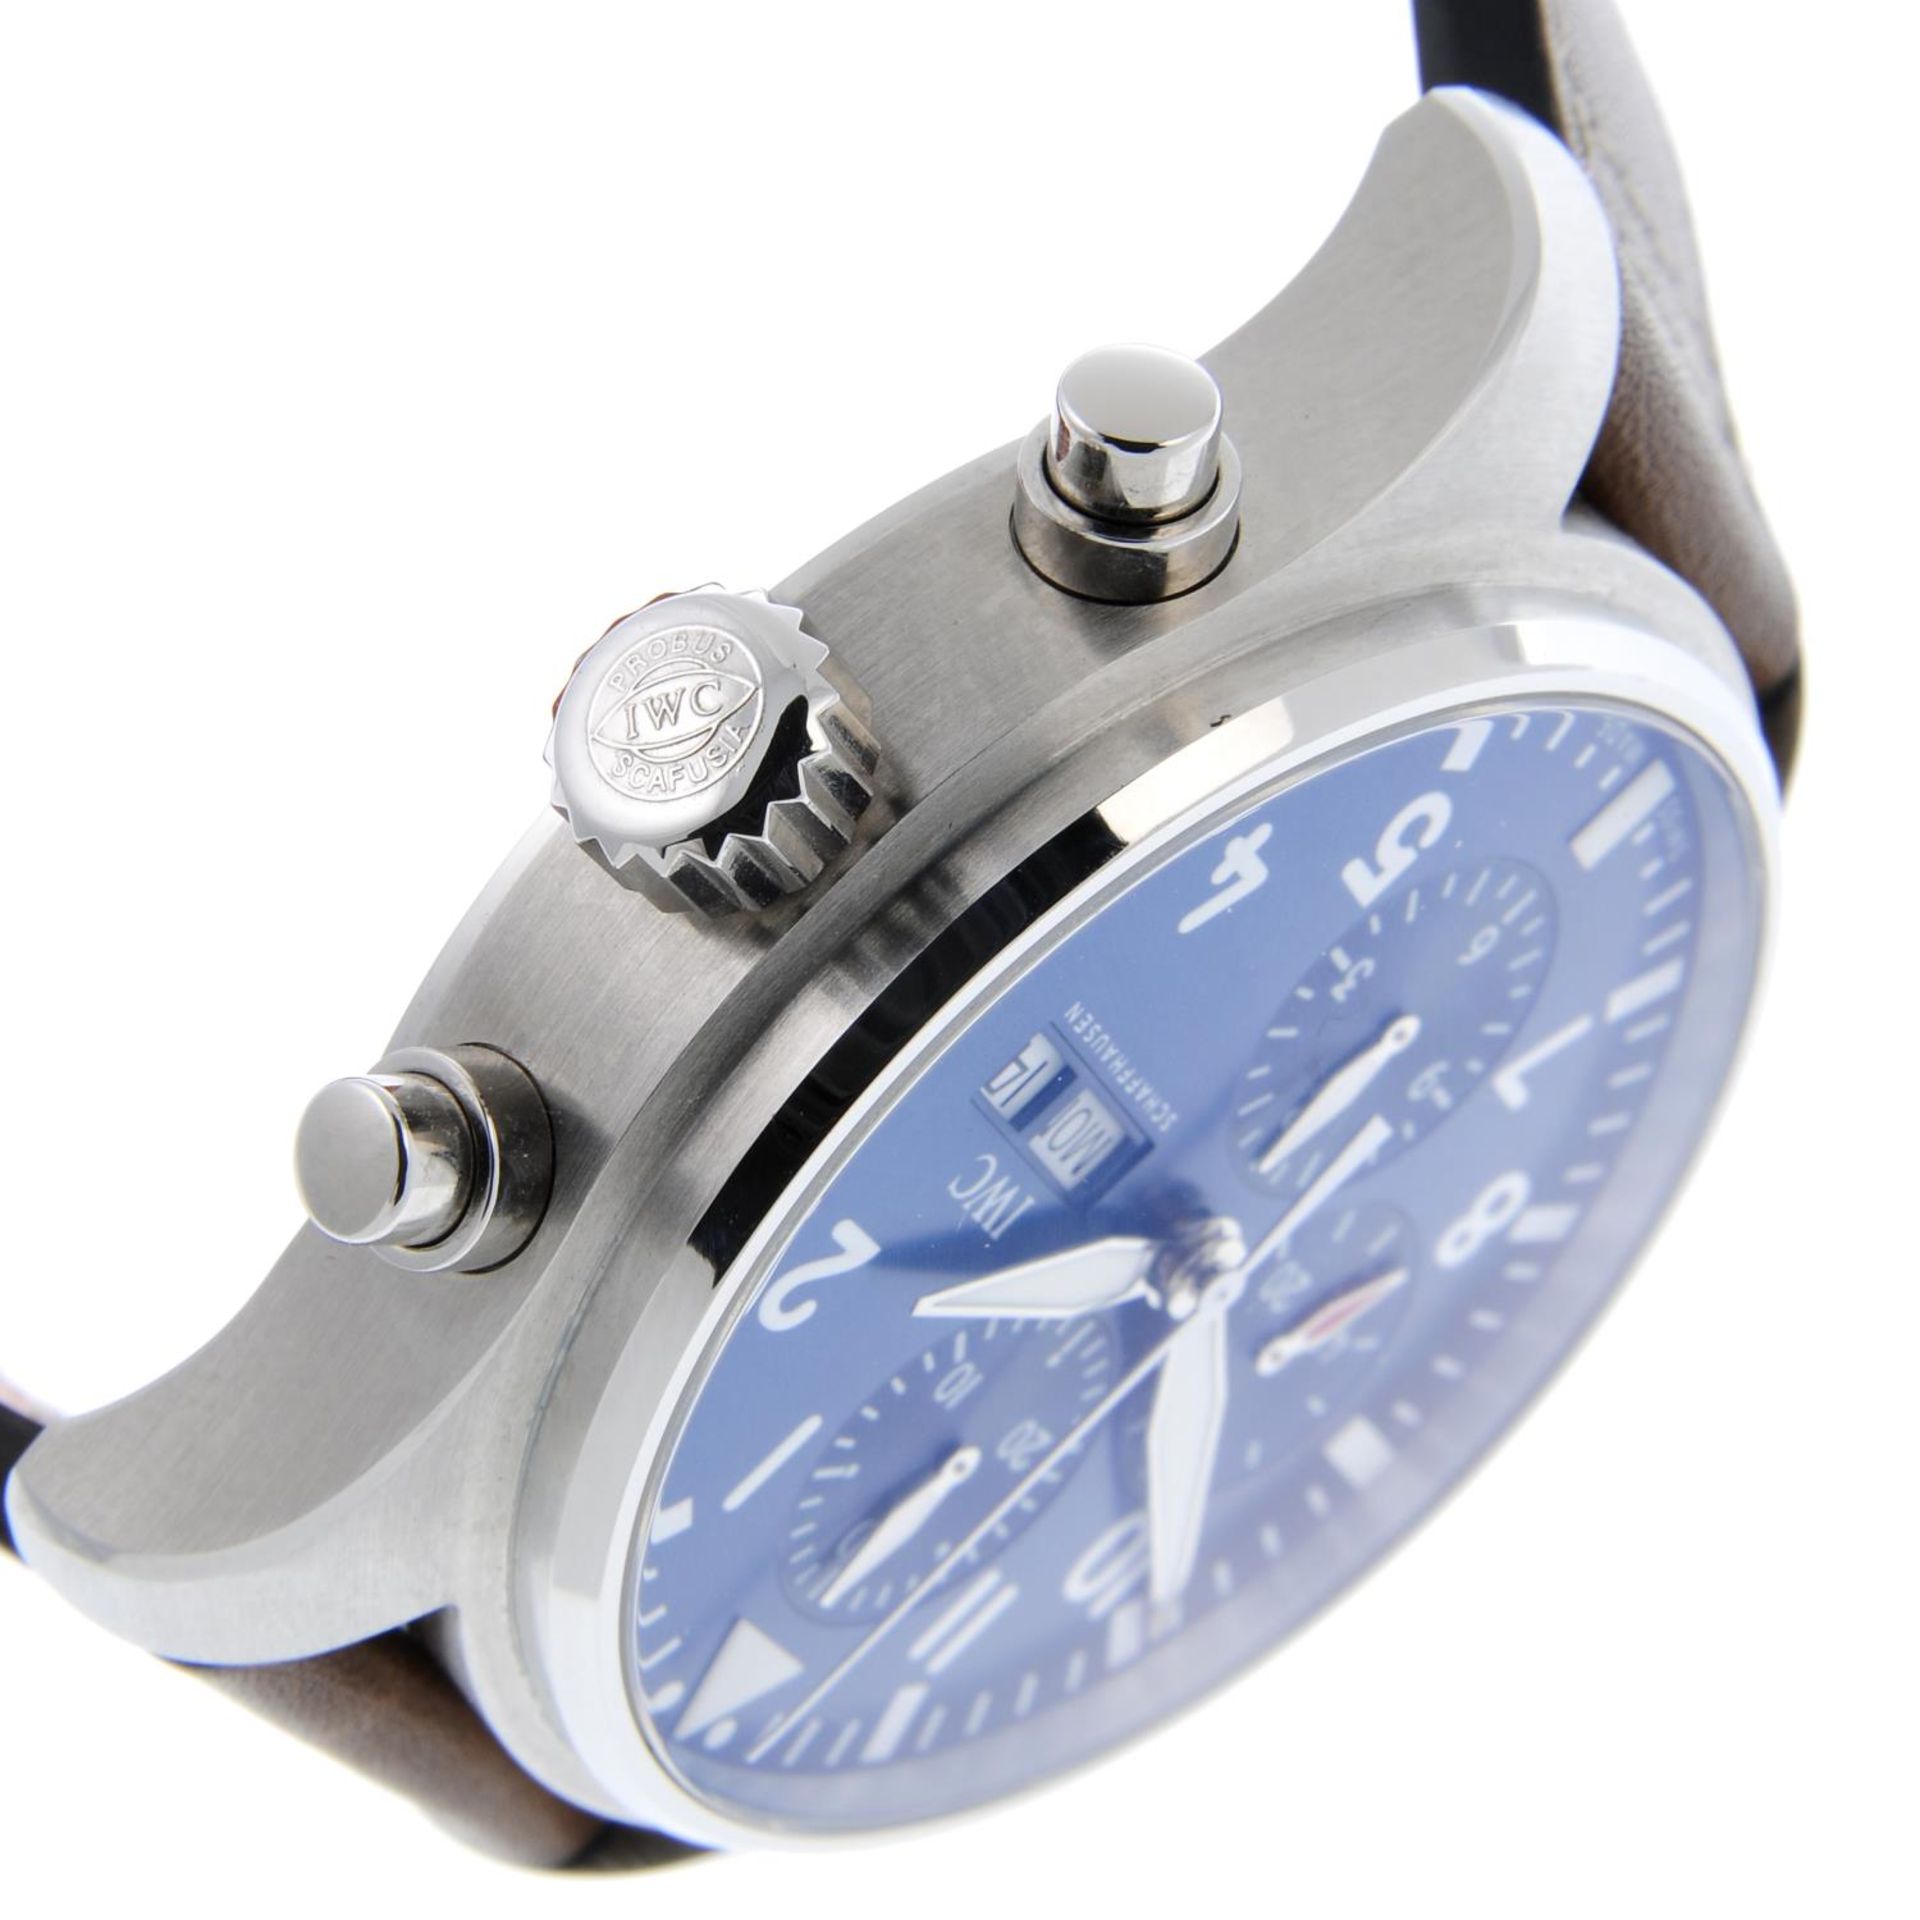 IWC - a gentleman's Pilot Edition Le Petit Prince chronograph wrist watch. - Bild 5 aus 5